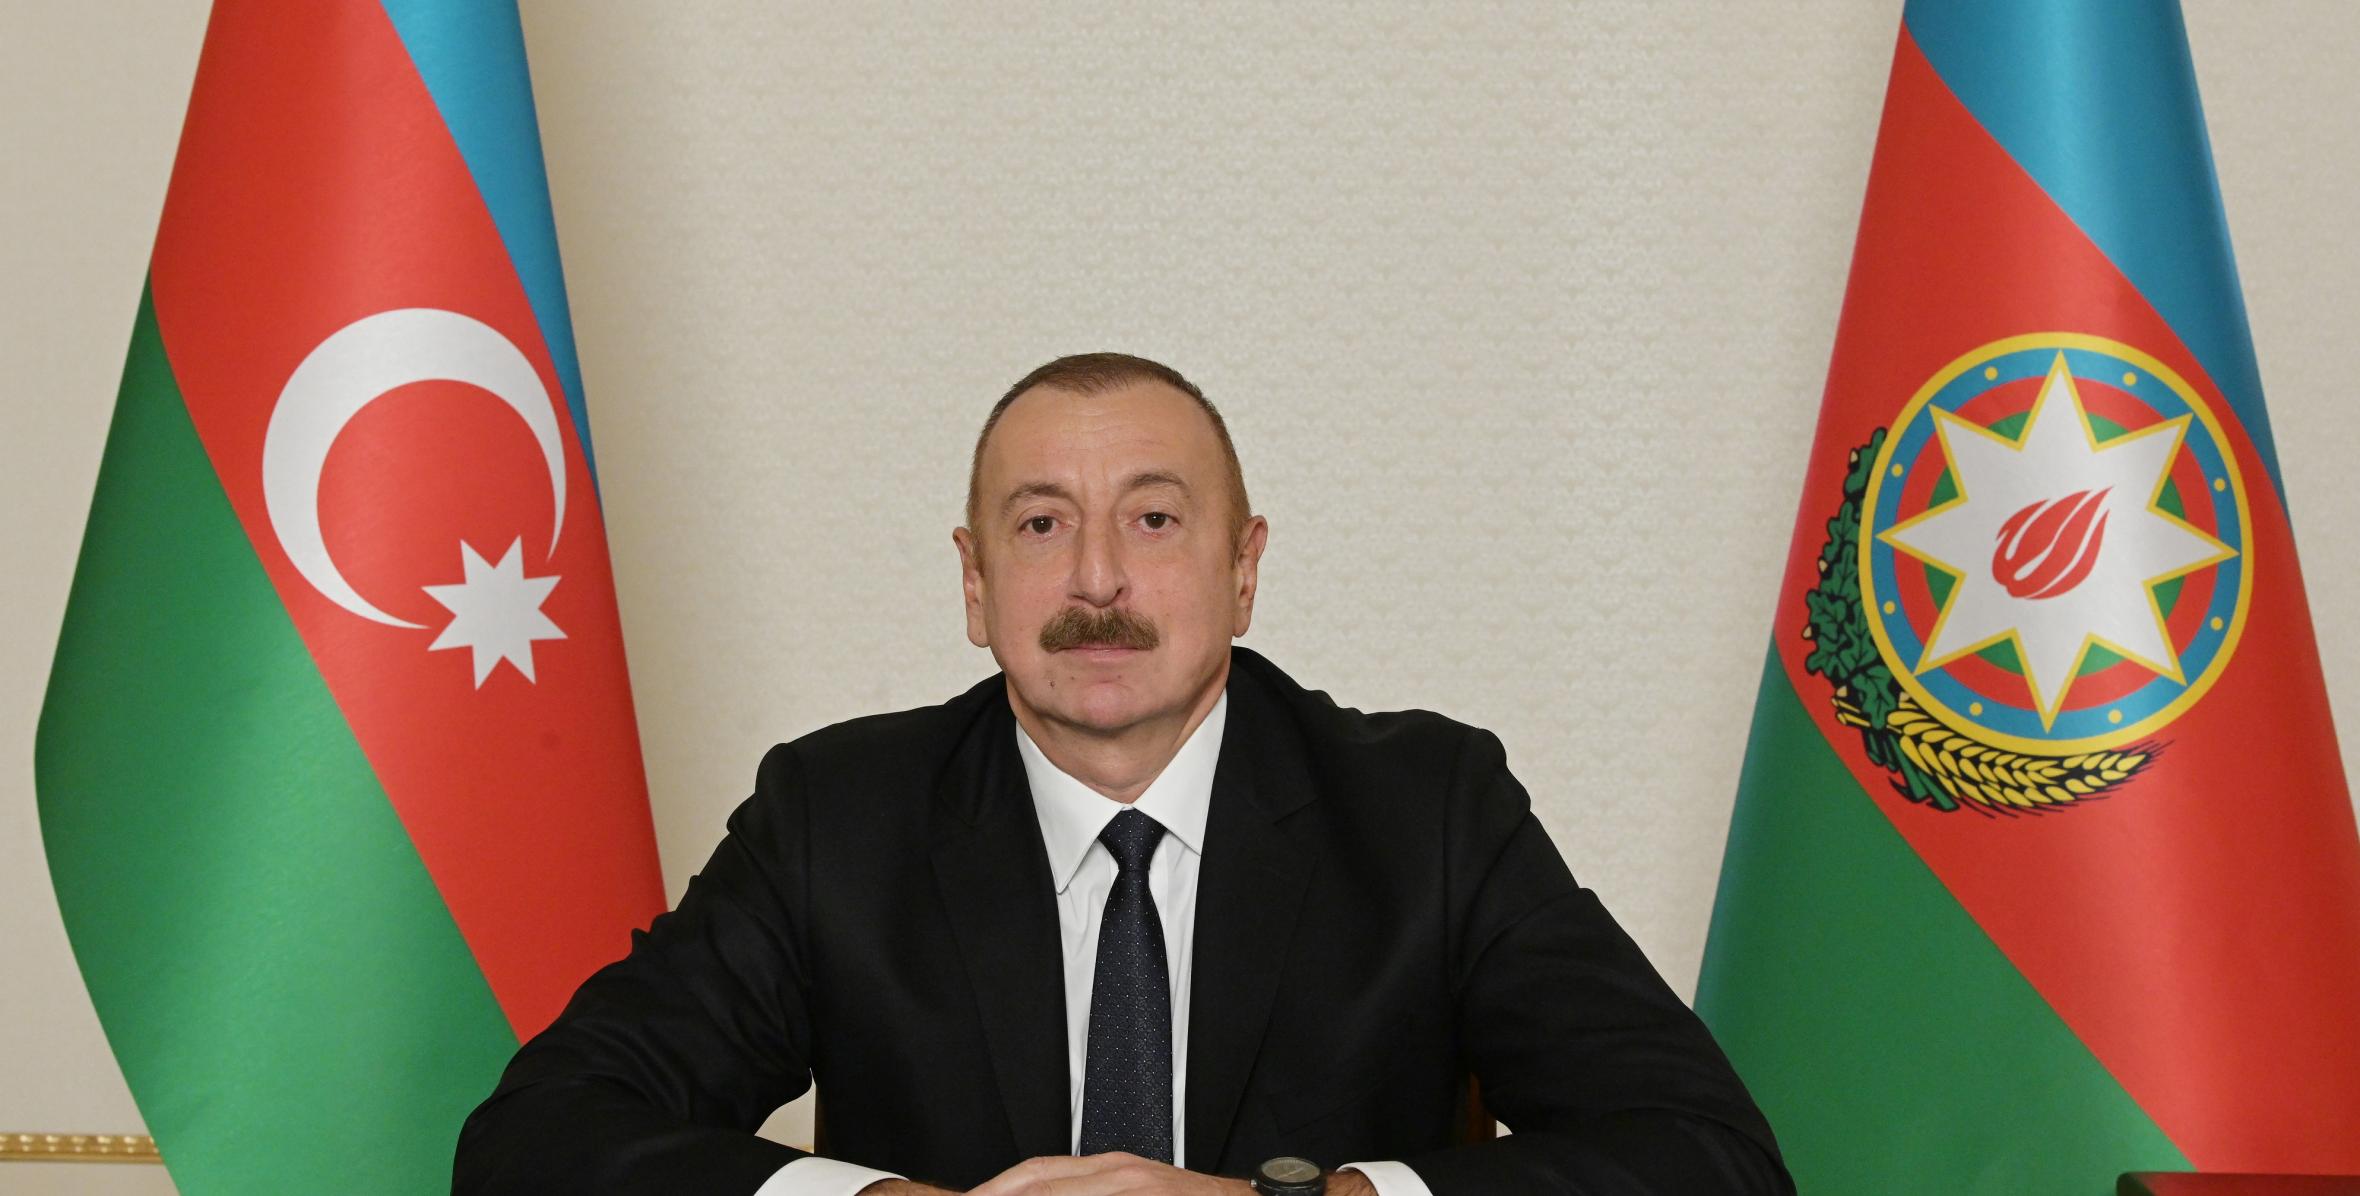 Ilham Aliyev addressed the nation